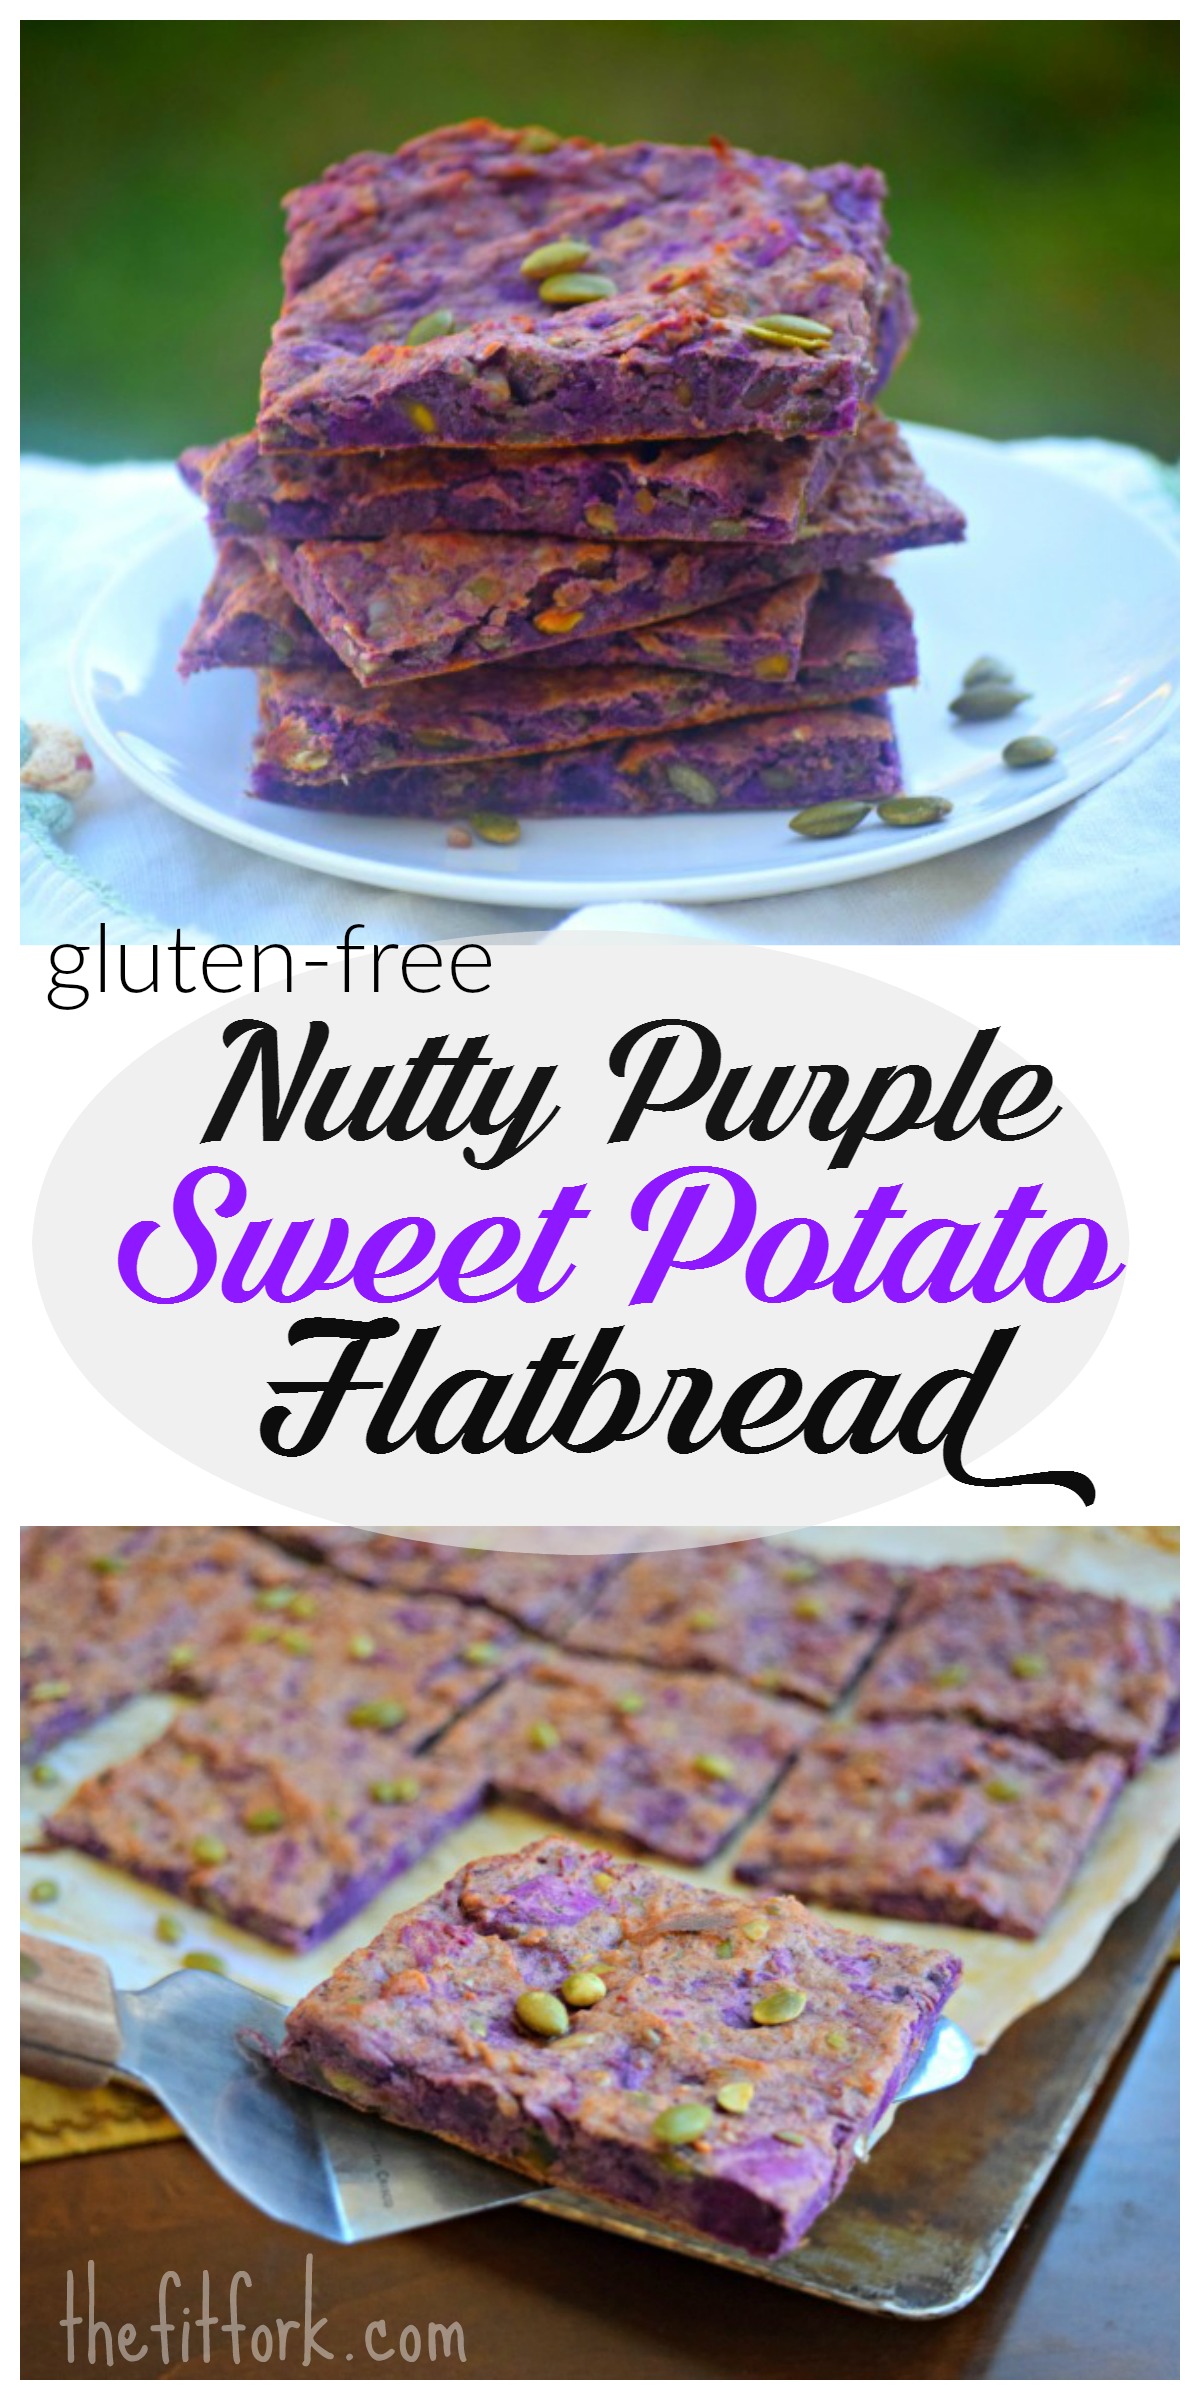 https://thefitfork.com/wp-content/uploads/2016/11/Nutty-Purple-Sweet-Potato-Flatbread-pin.jpg